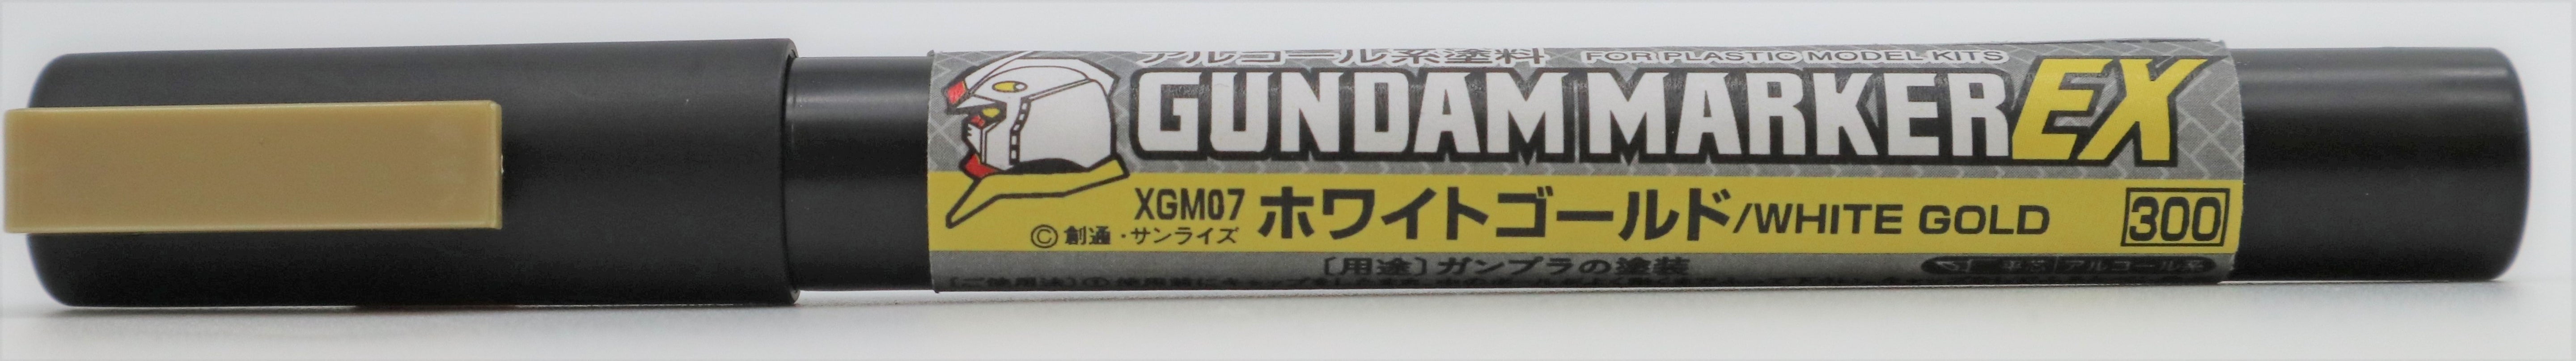 Gundam Marker XGM07 EX White Gold Paint Marker